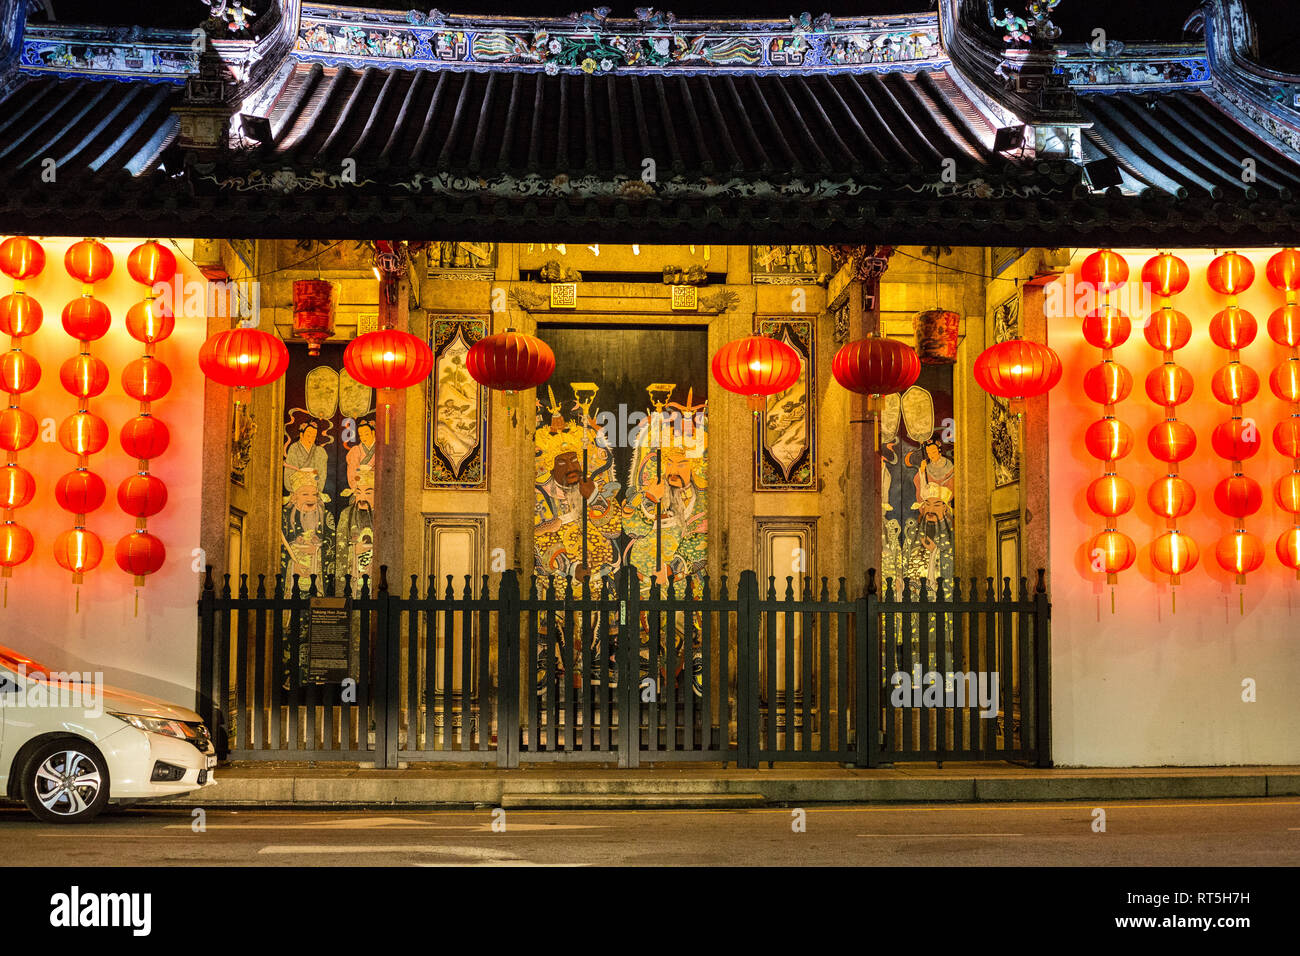 Entrance to Han Jiang Chinese Ancestral temple, George Town, Penang, Malaysia, at Night. Stock Photo